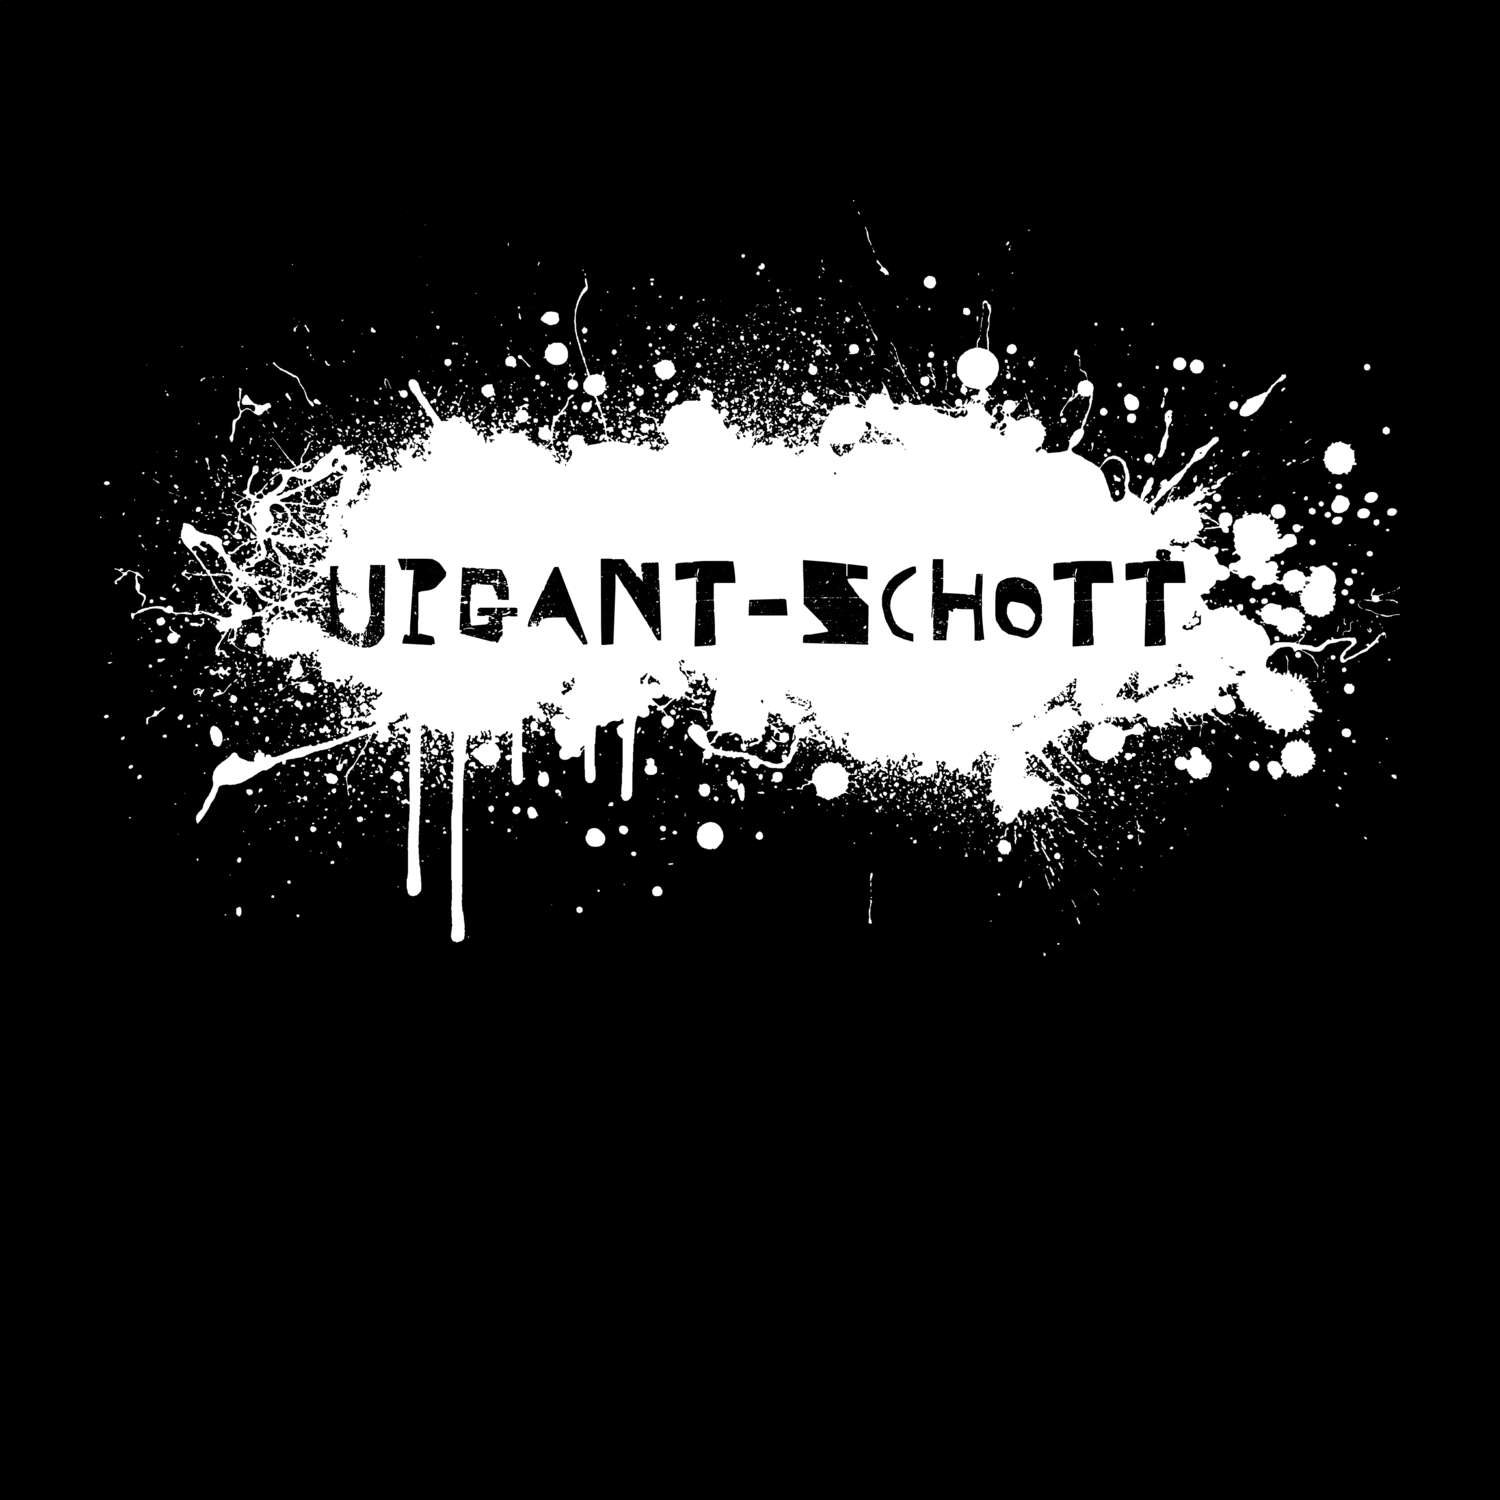 Upgant-Schott T-Shirt »Paint Splash Punk«